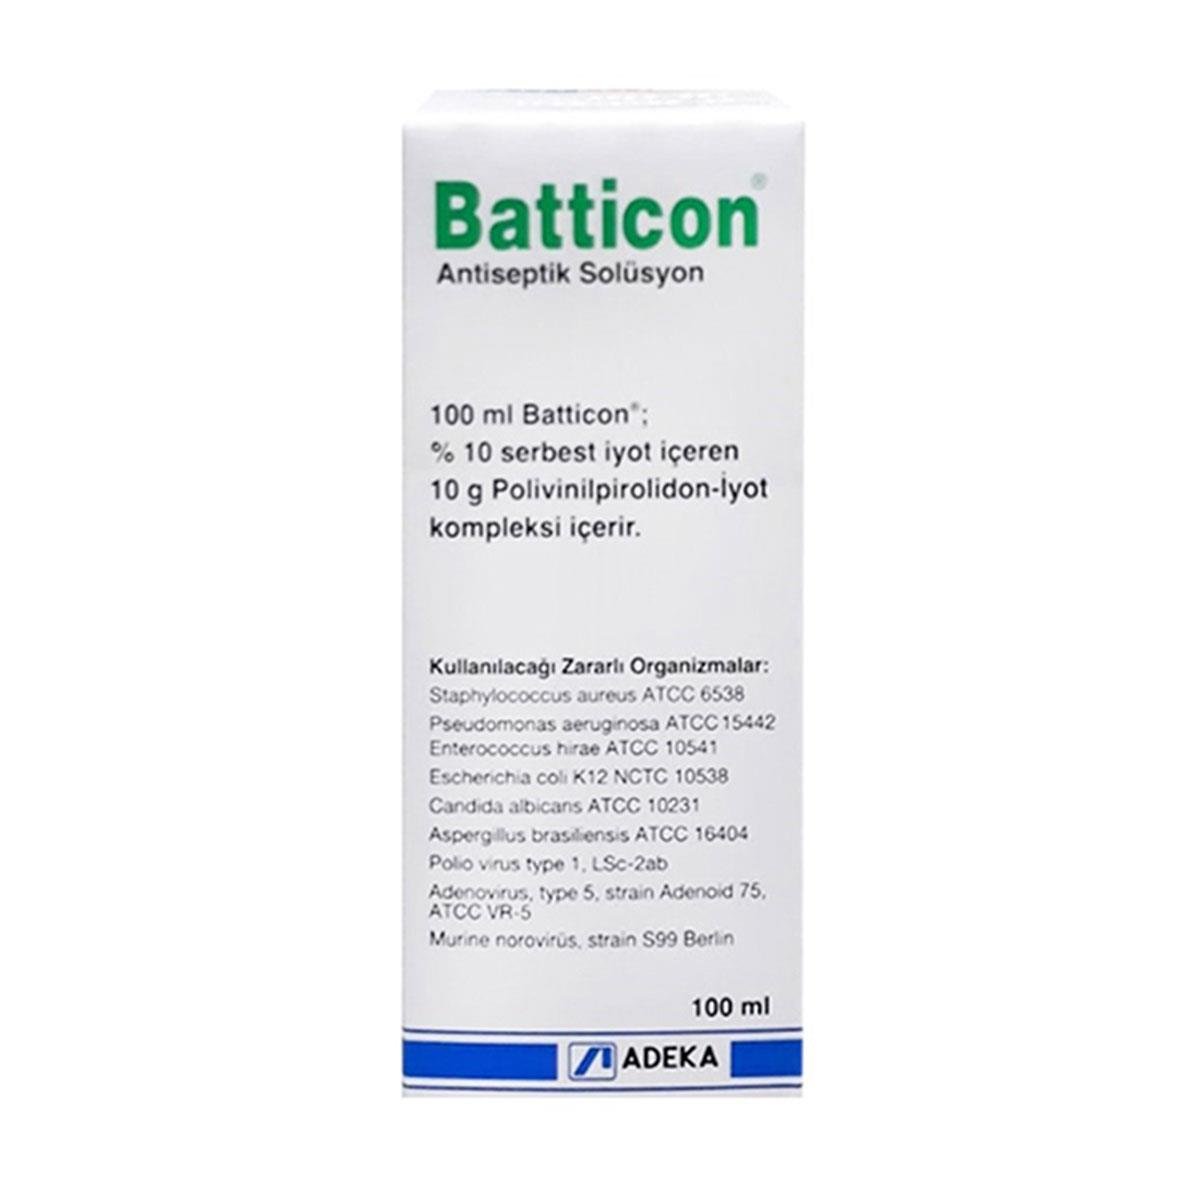 Batticon Antiseptik Solüsyon 100 ml - Daffne